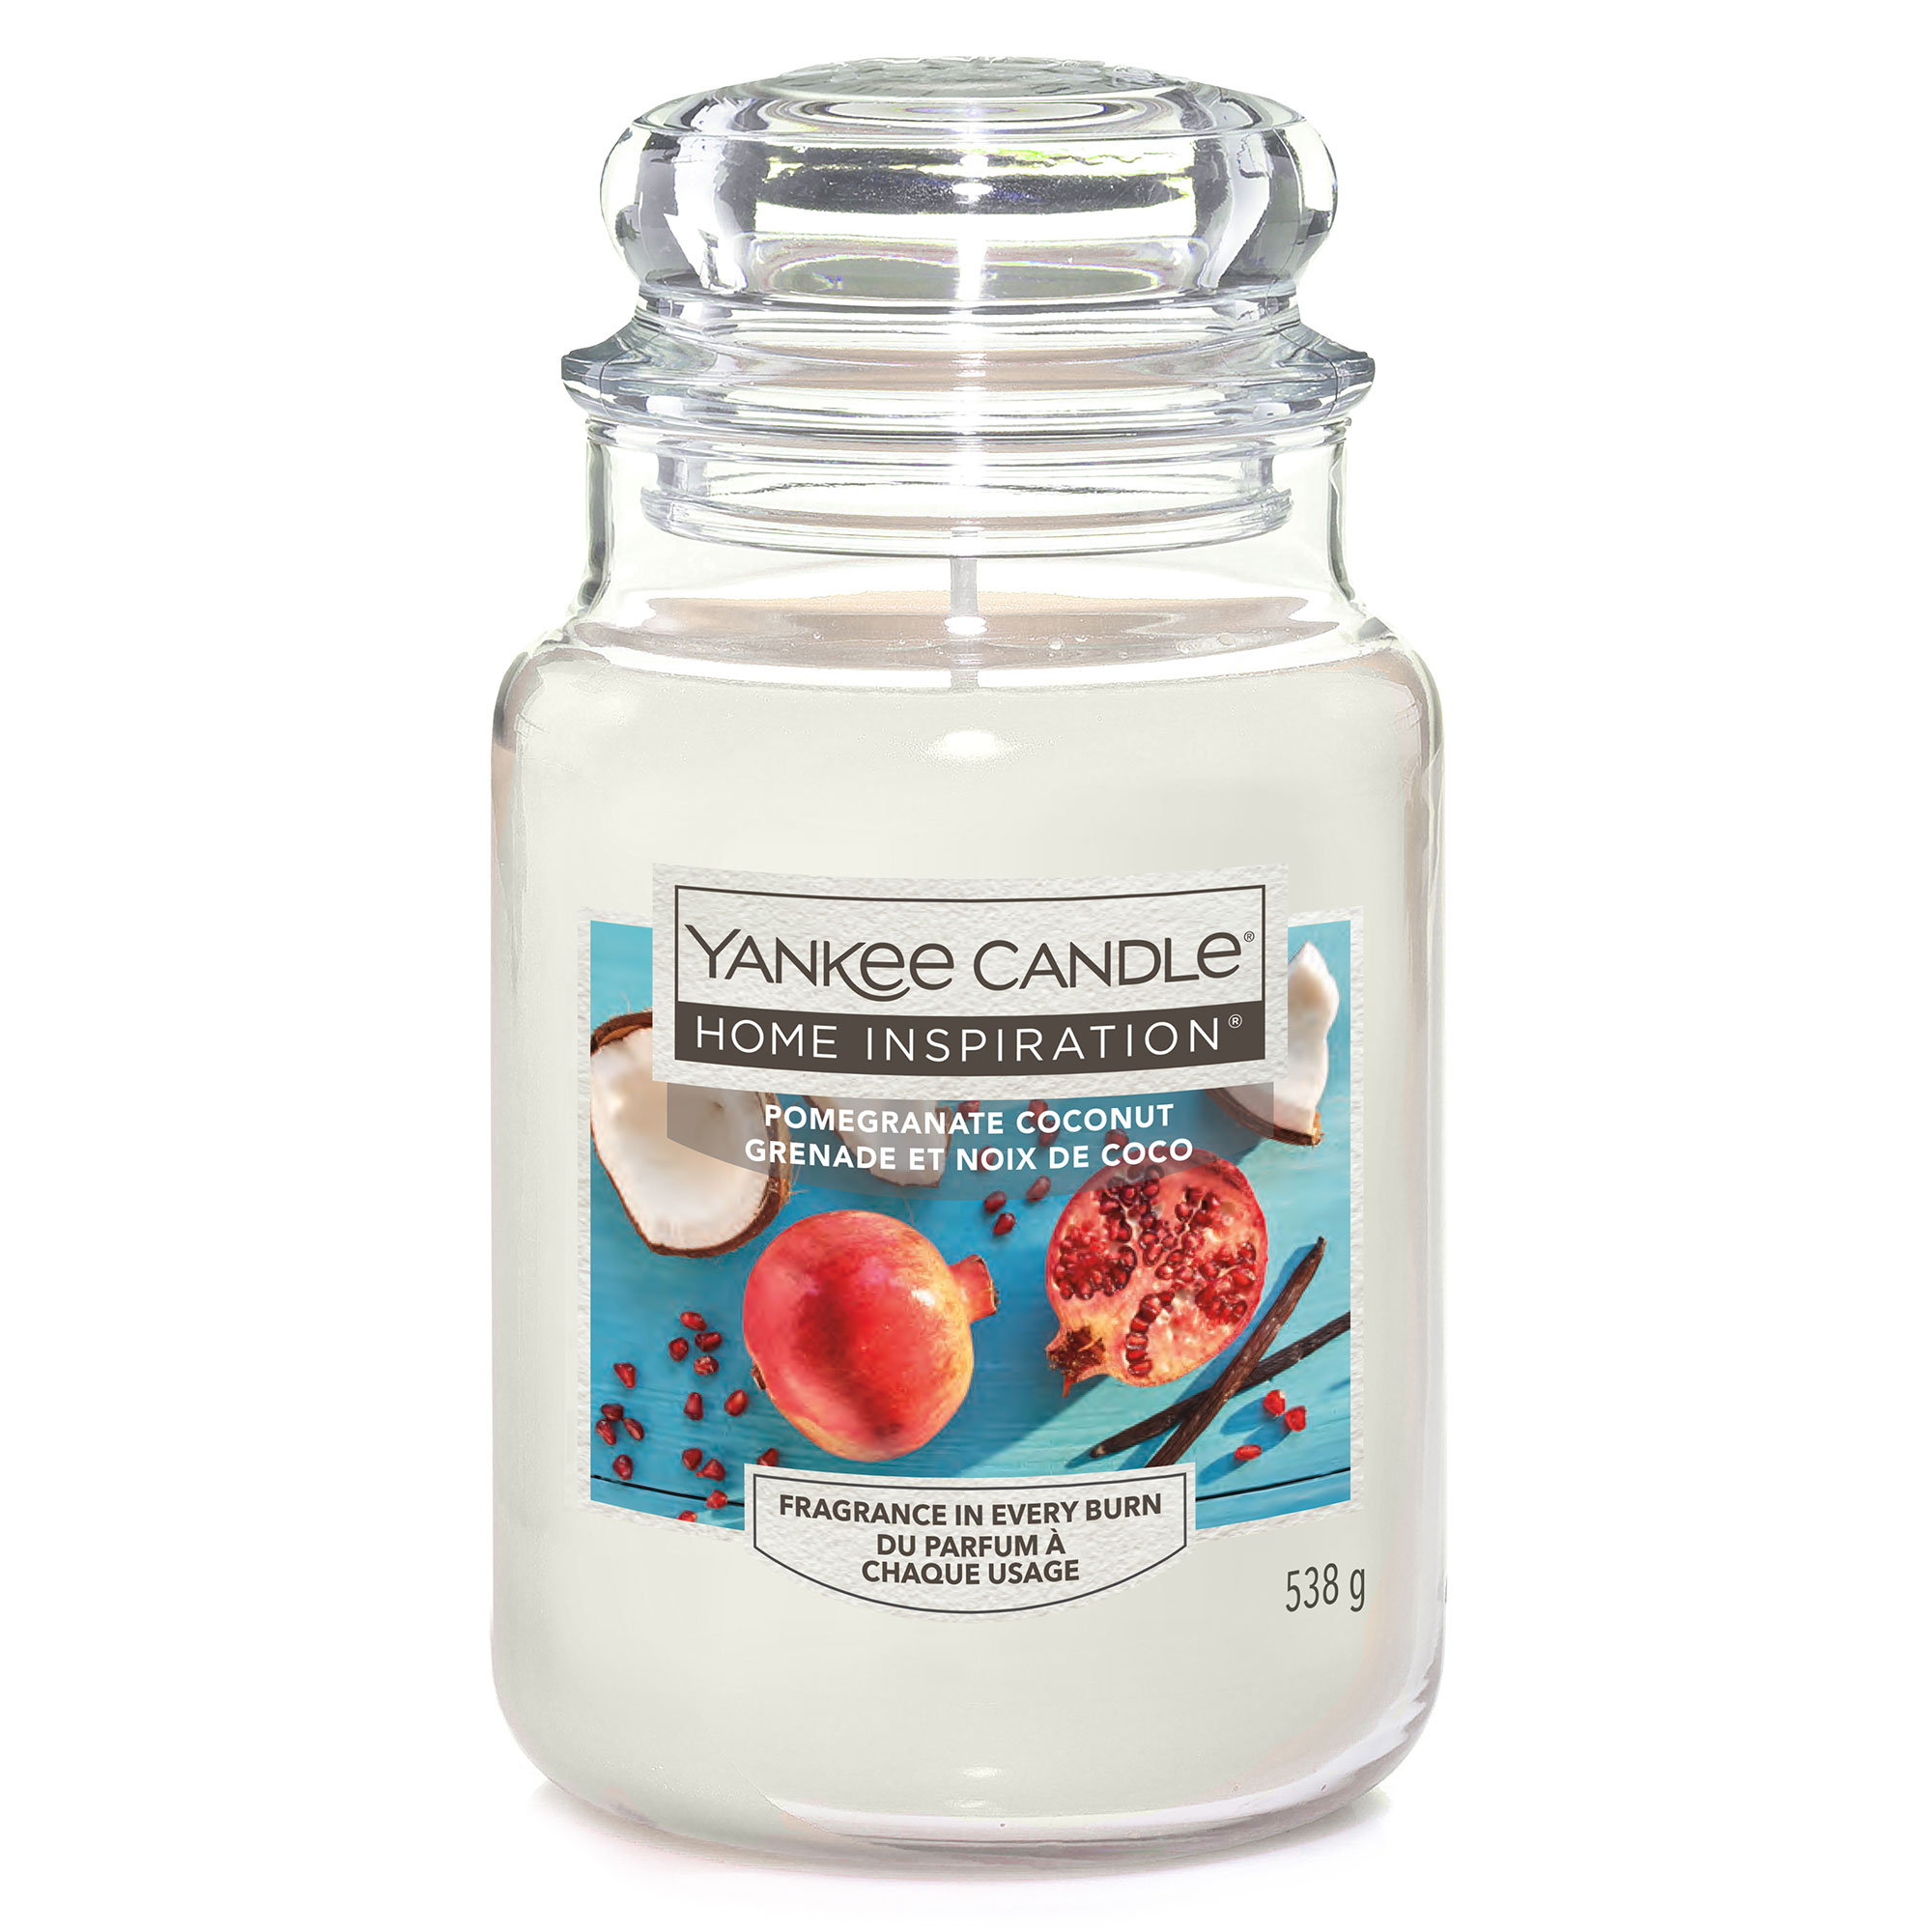 Yankee Candle Home Inspiration Pomegranate Coconut Large Jar